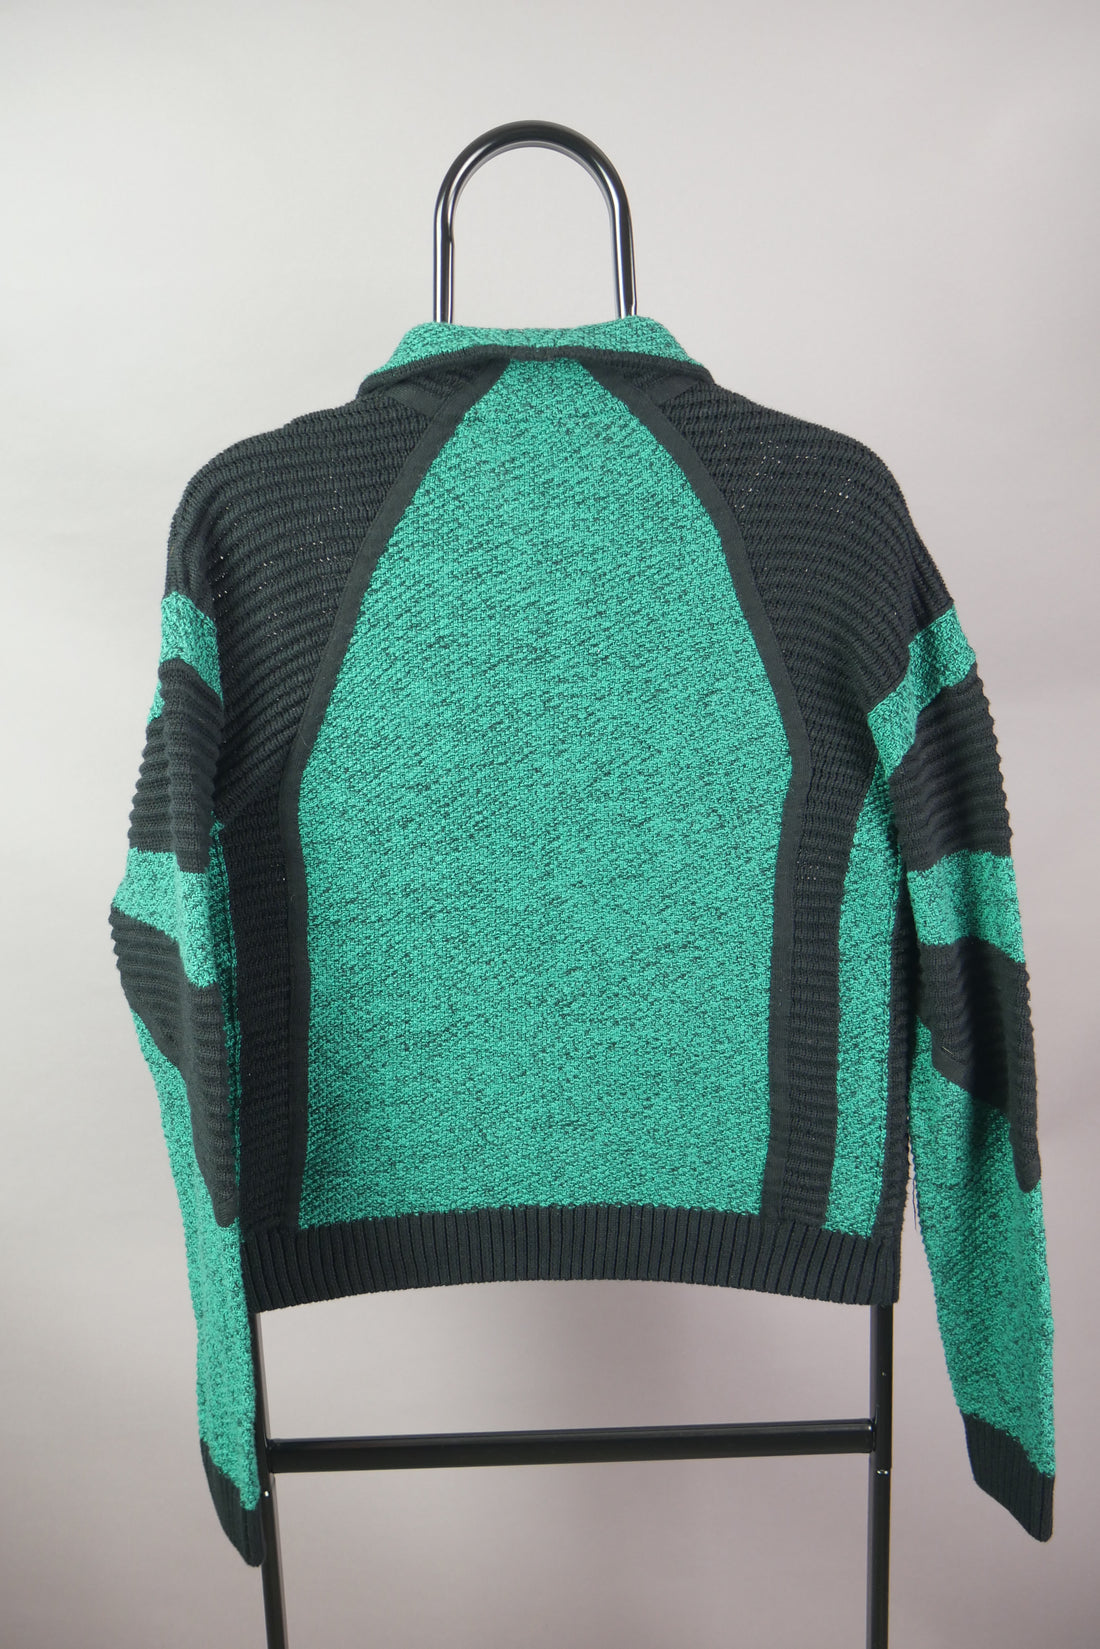 The Adidas Equipment Knit Sweatshirt (Women's S)